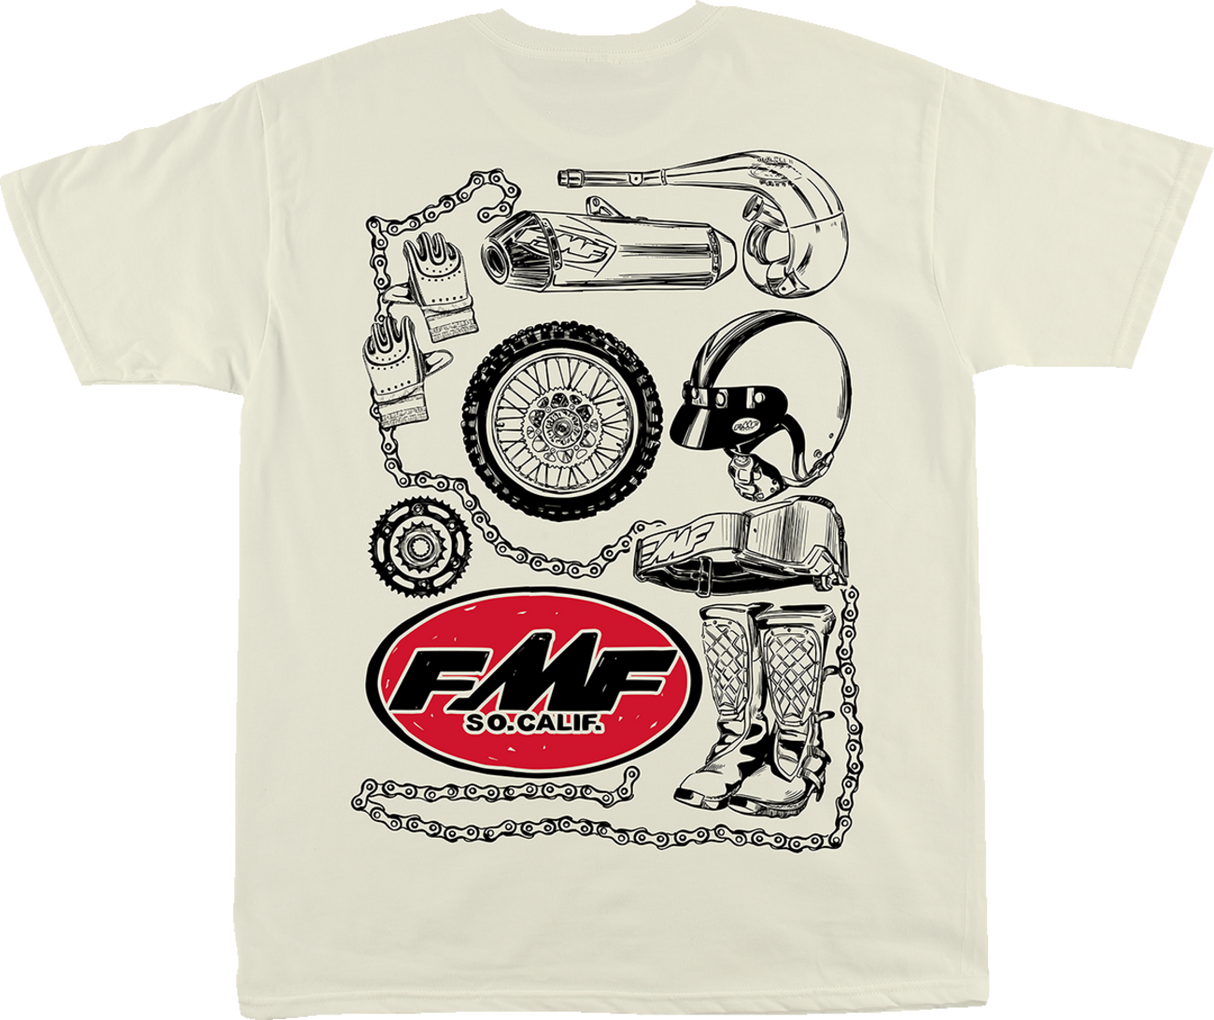 FMF Collector T-Shirt - Natural - Small FA23118906NATSM